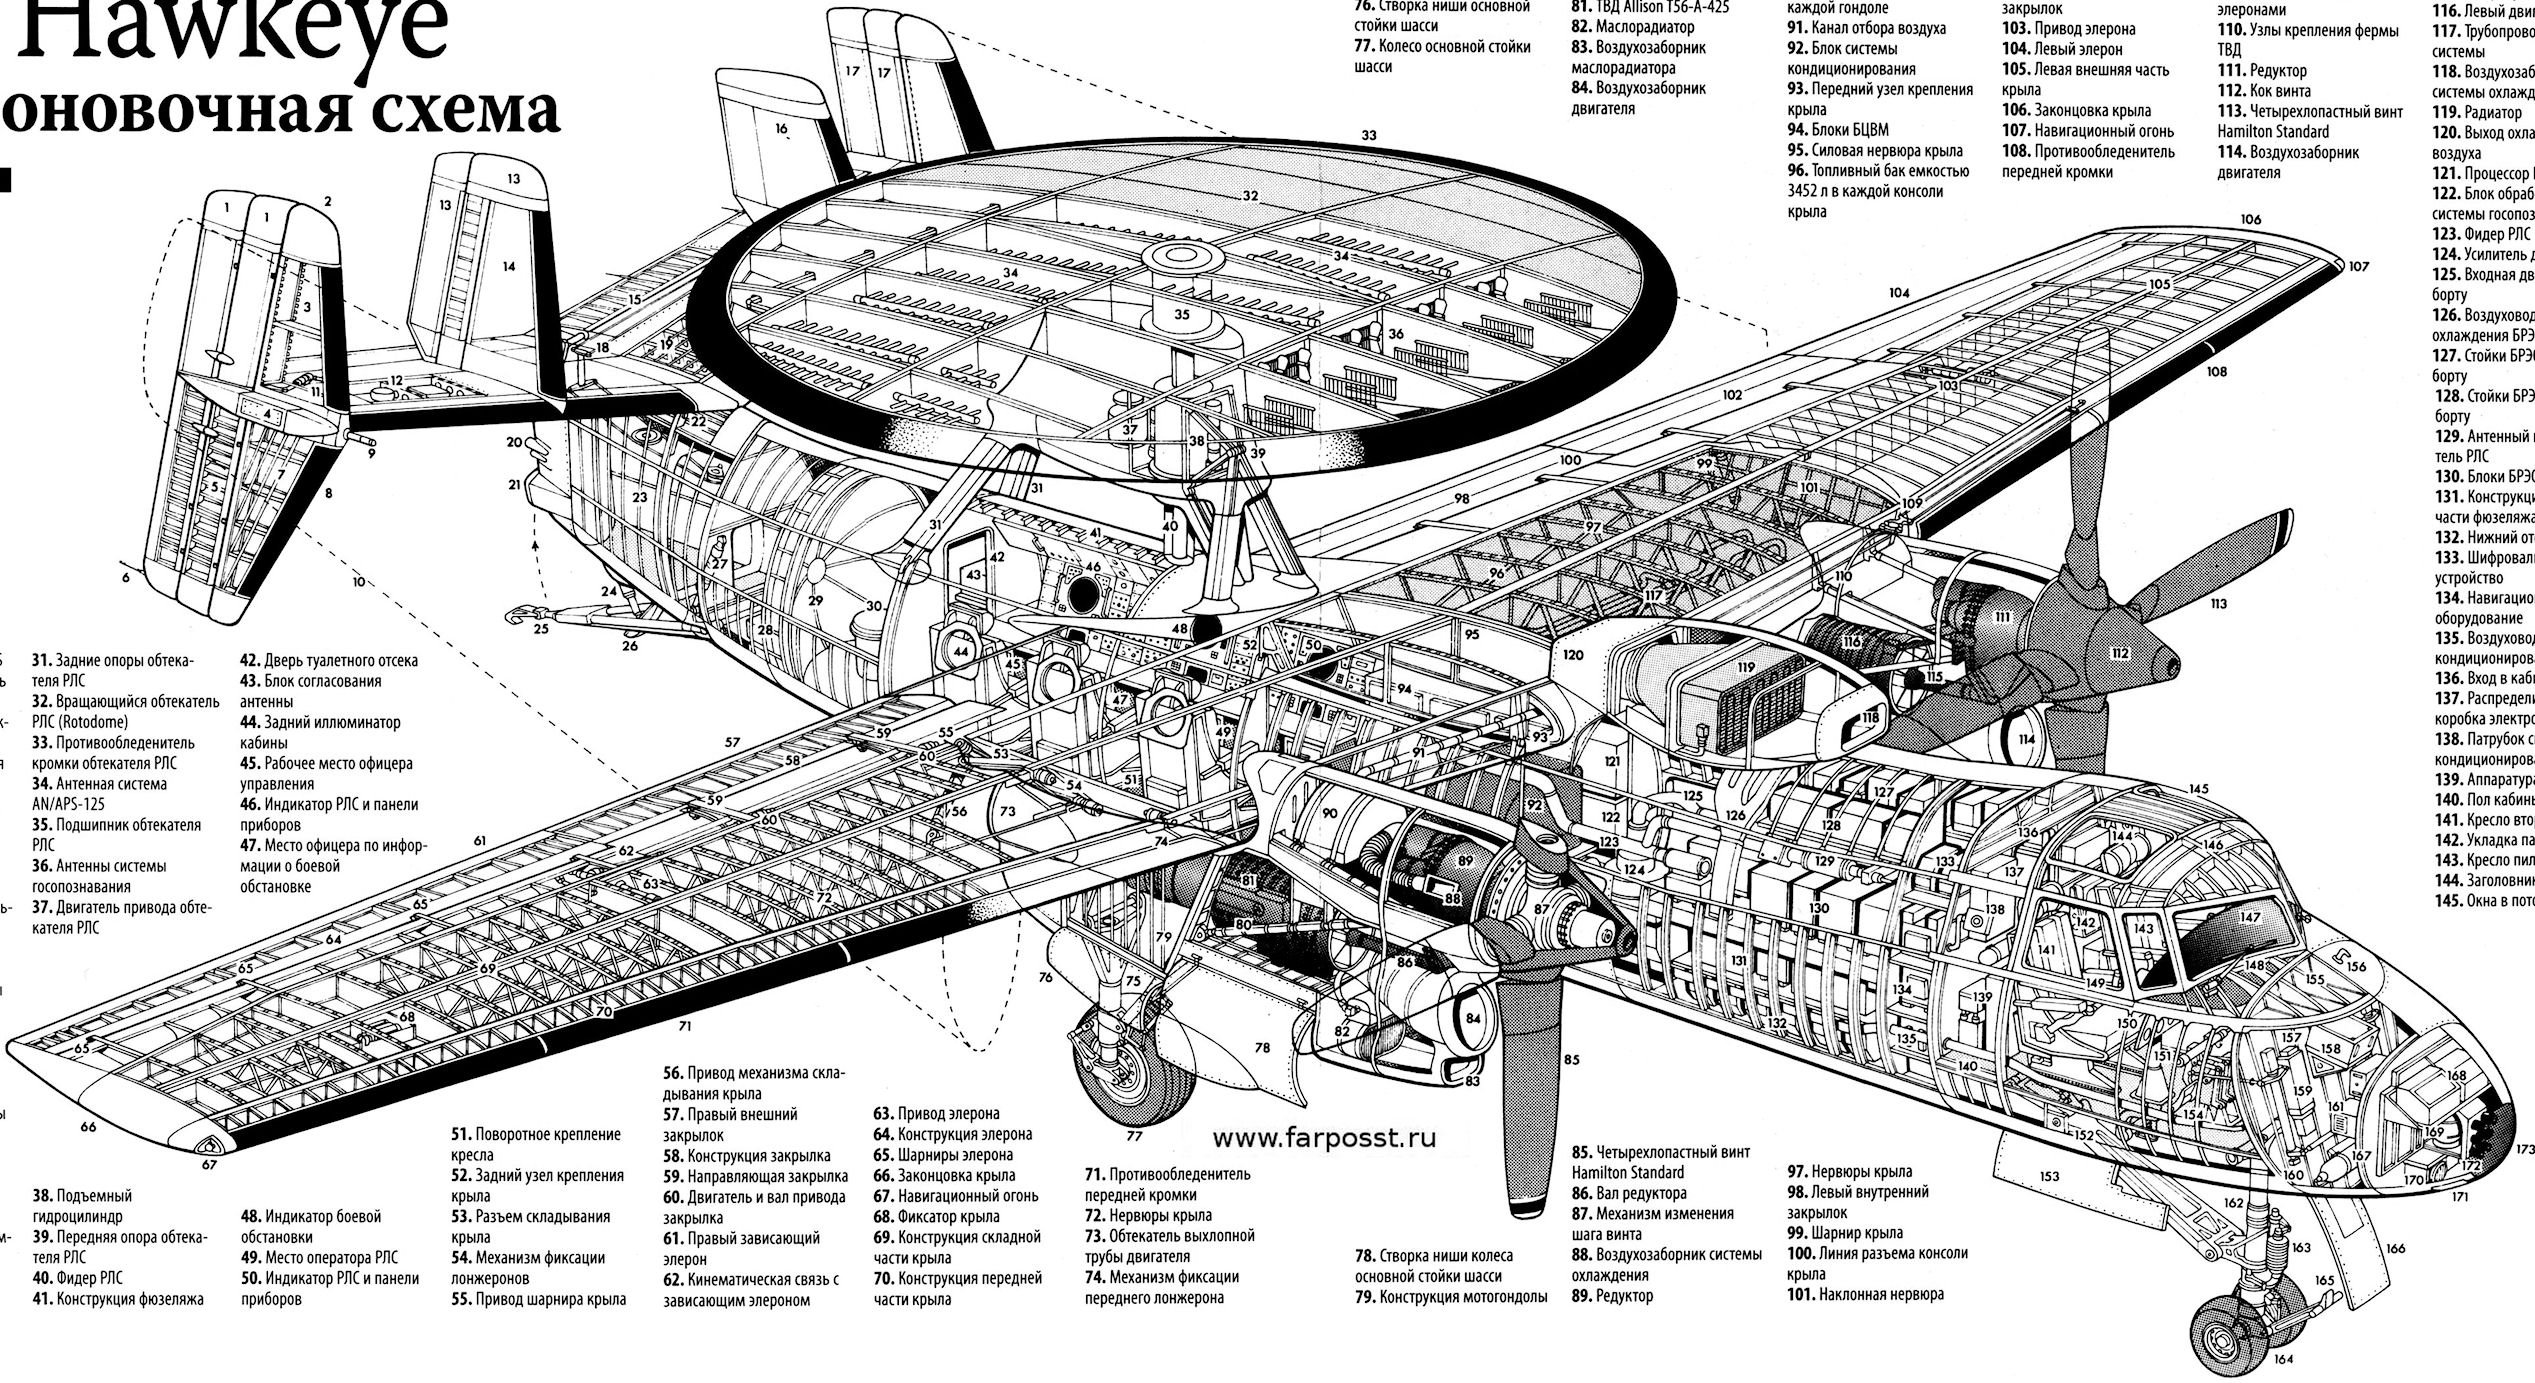 1964, Grumman, E 2, Hawkeye, Aircrafts, Radar, Military, Us air force, Marine, Navy Wallpaper